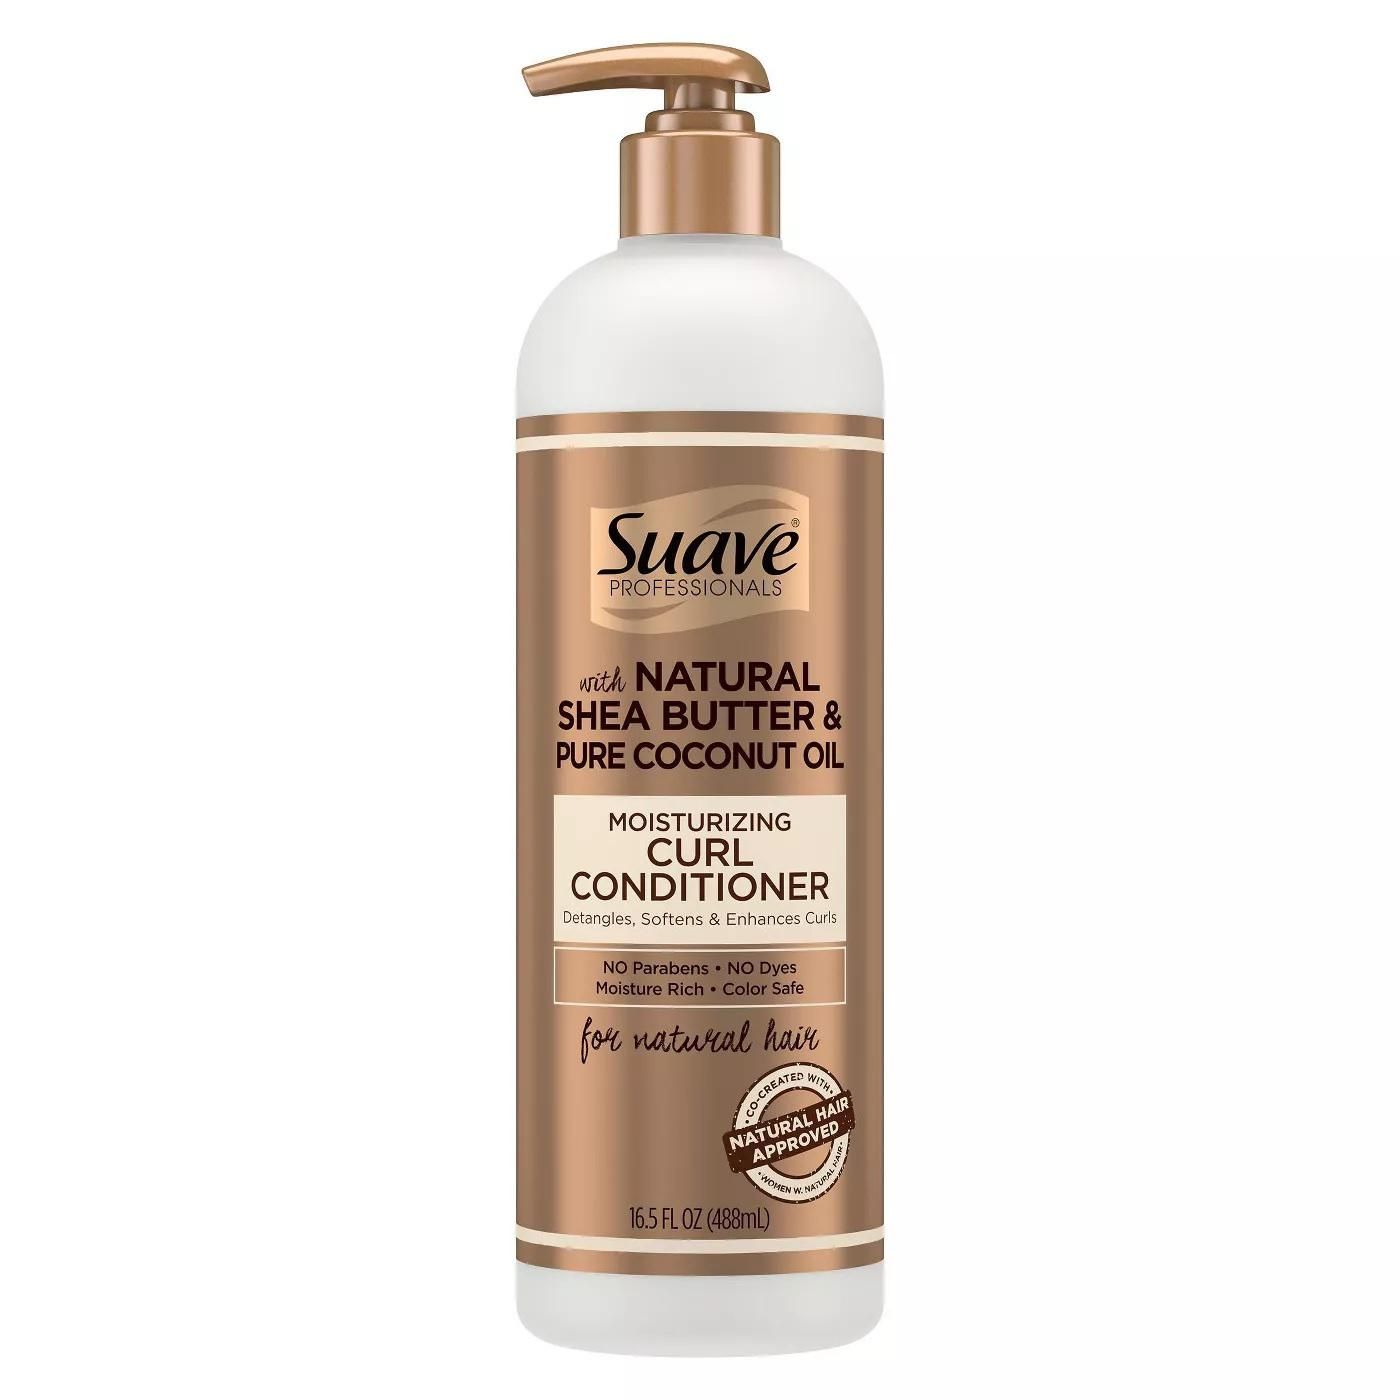 Natural Shea Butter & Pure Coconut Oil Moisturizing Curl Conditioner